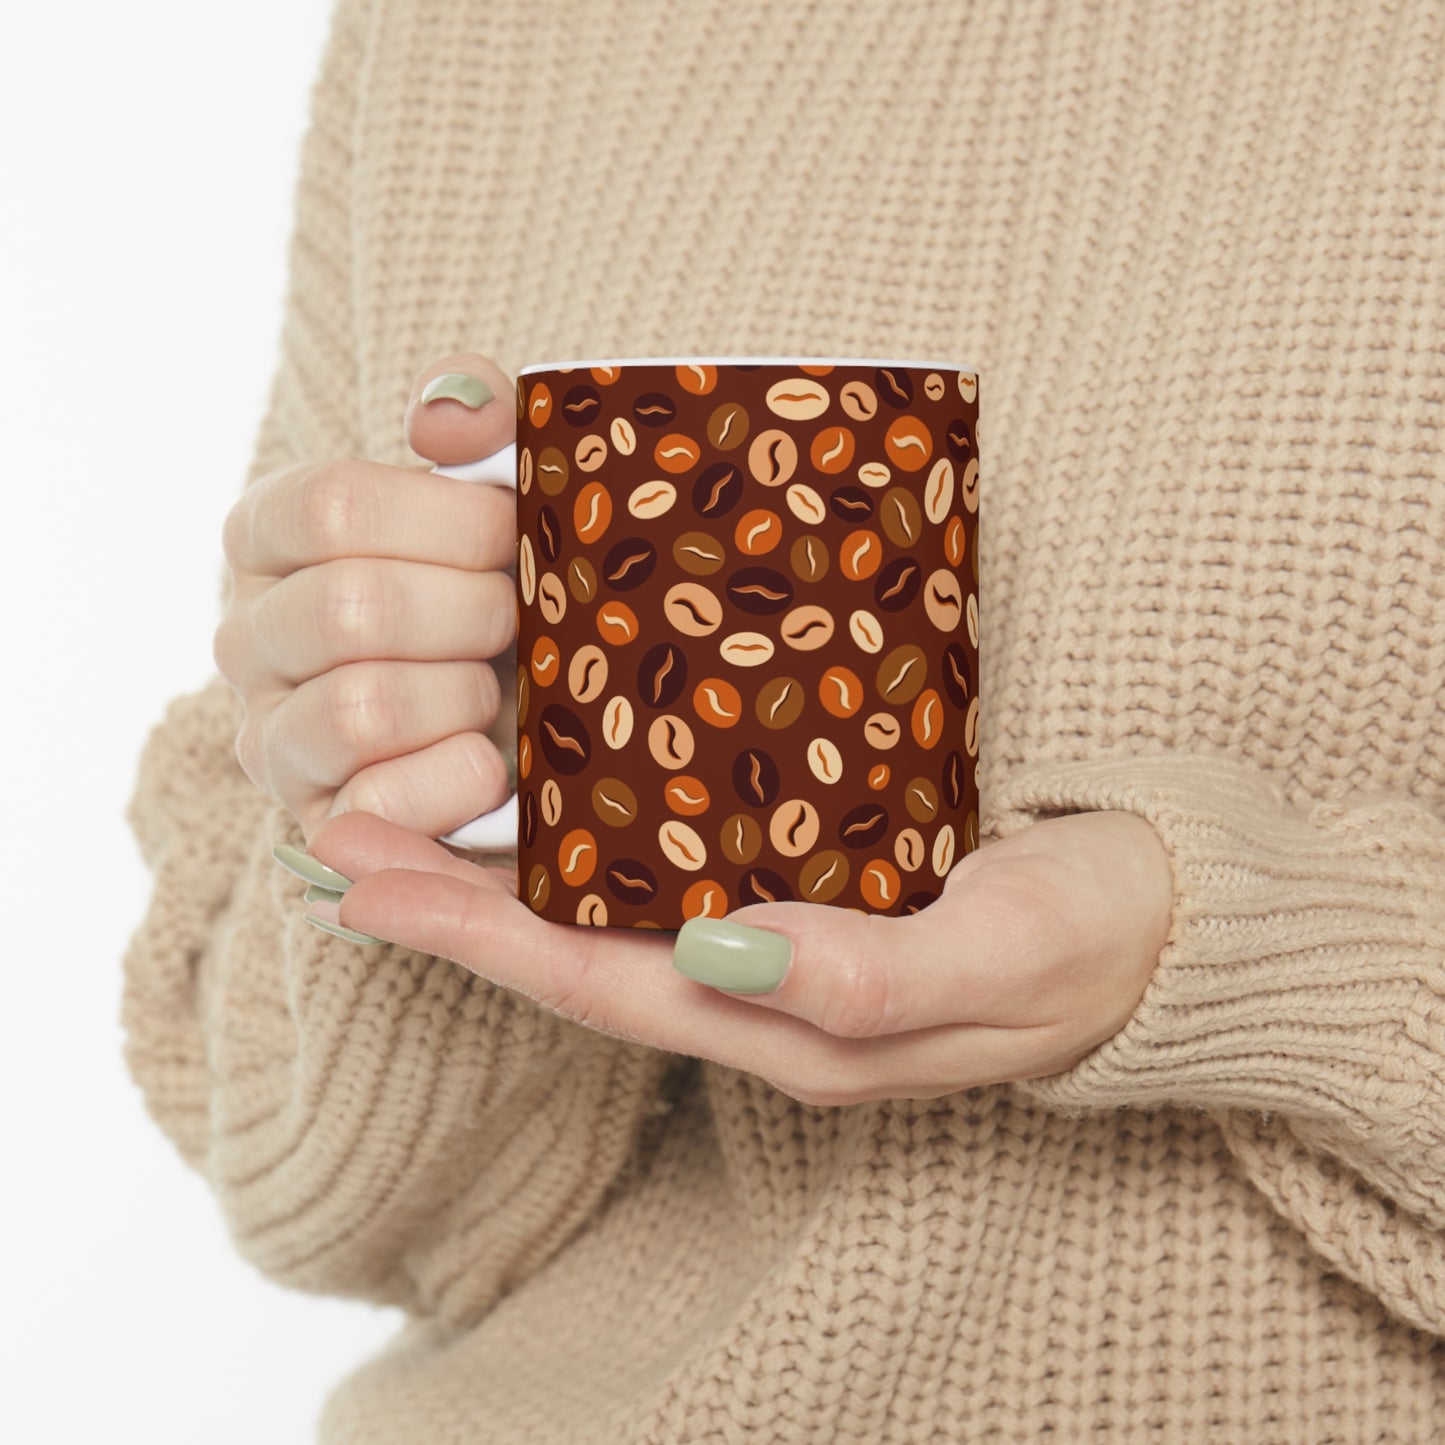 Coffee Bean Ceramic Mug (11oz)